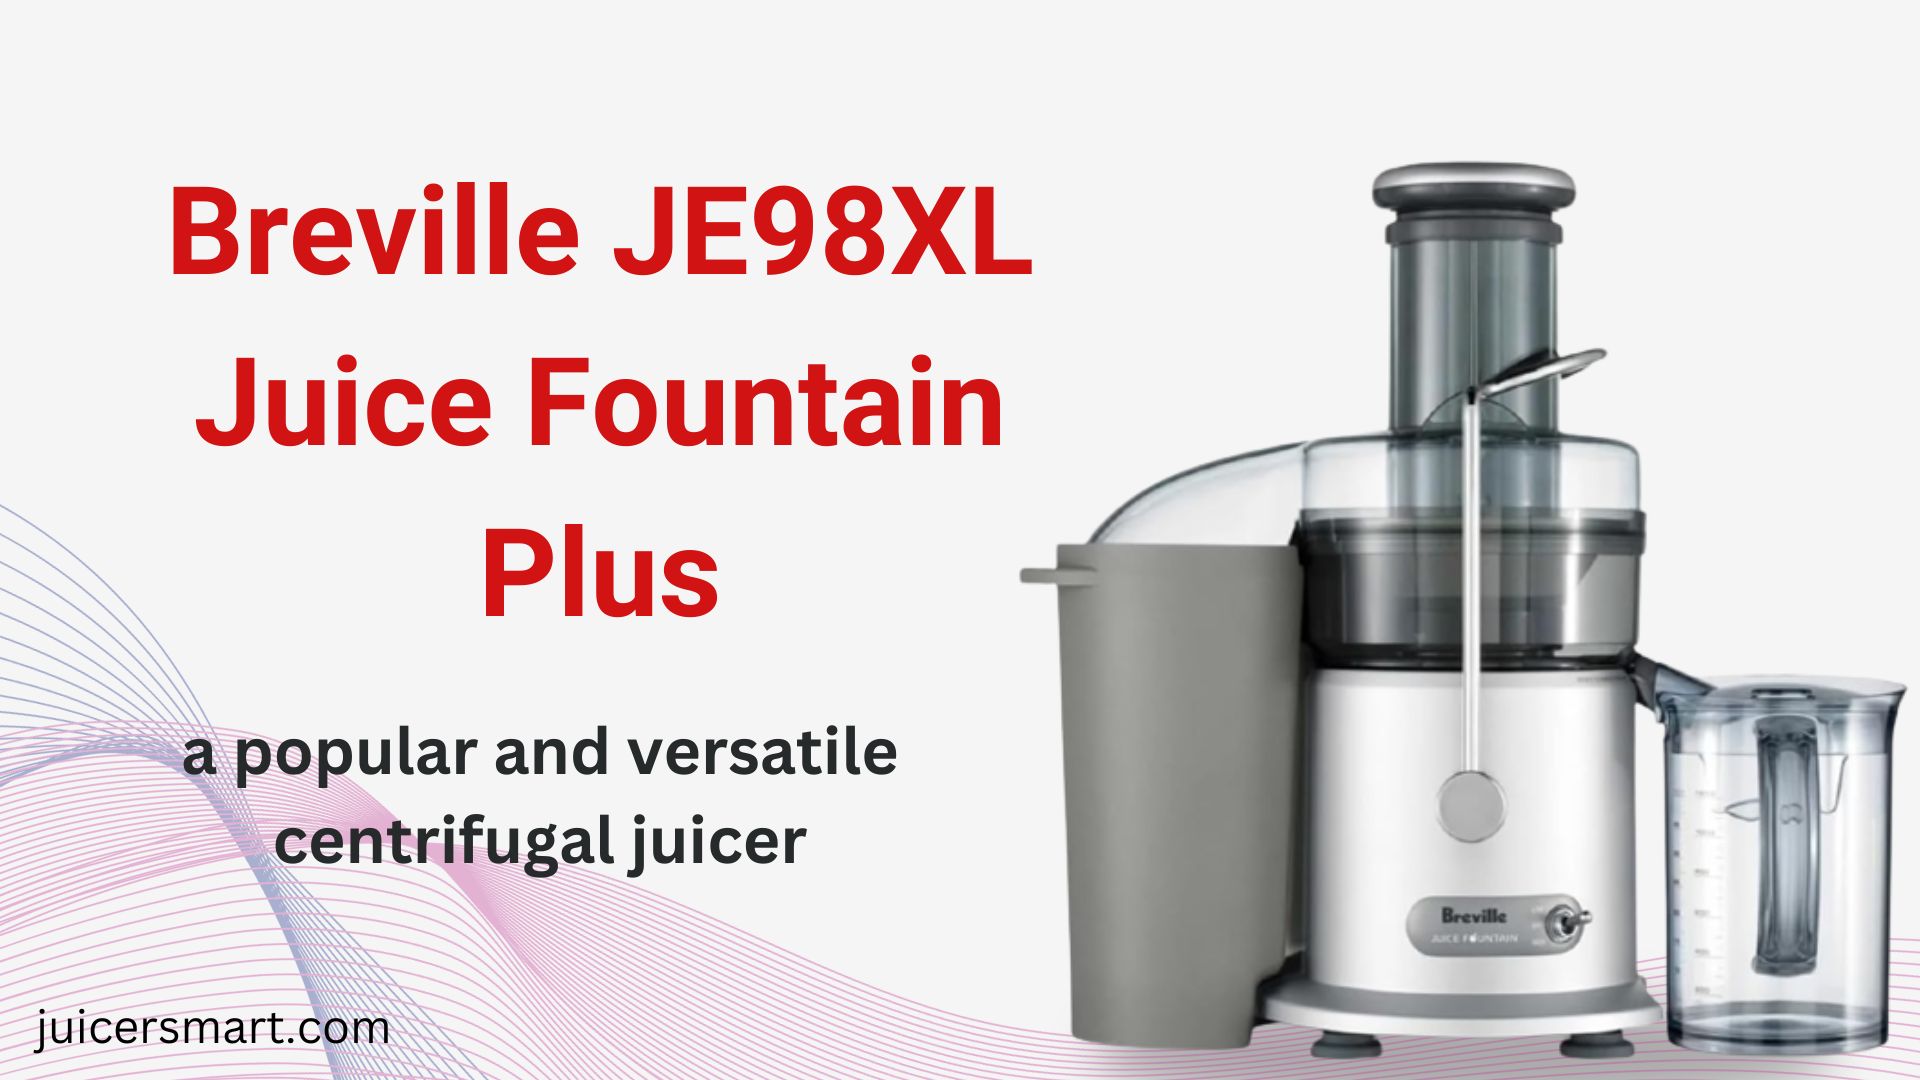 Breville JE98XL Juice Fountain Plus